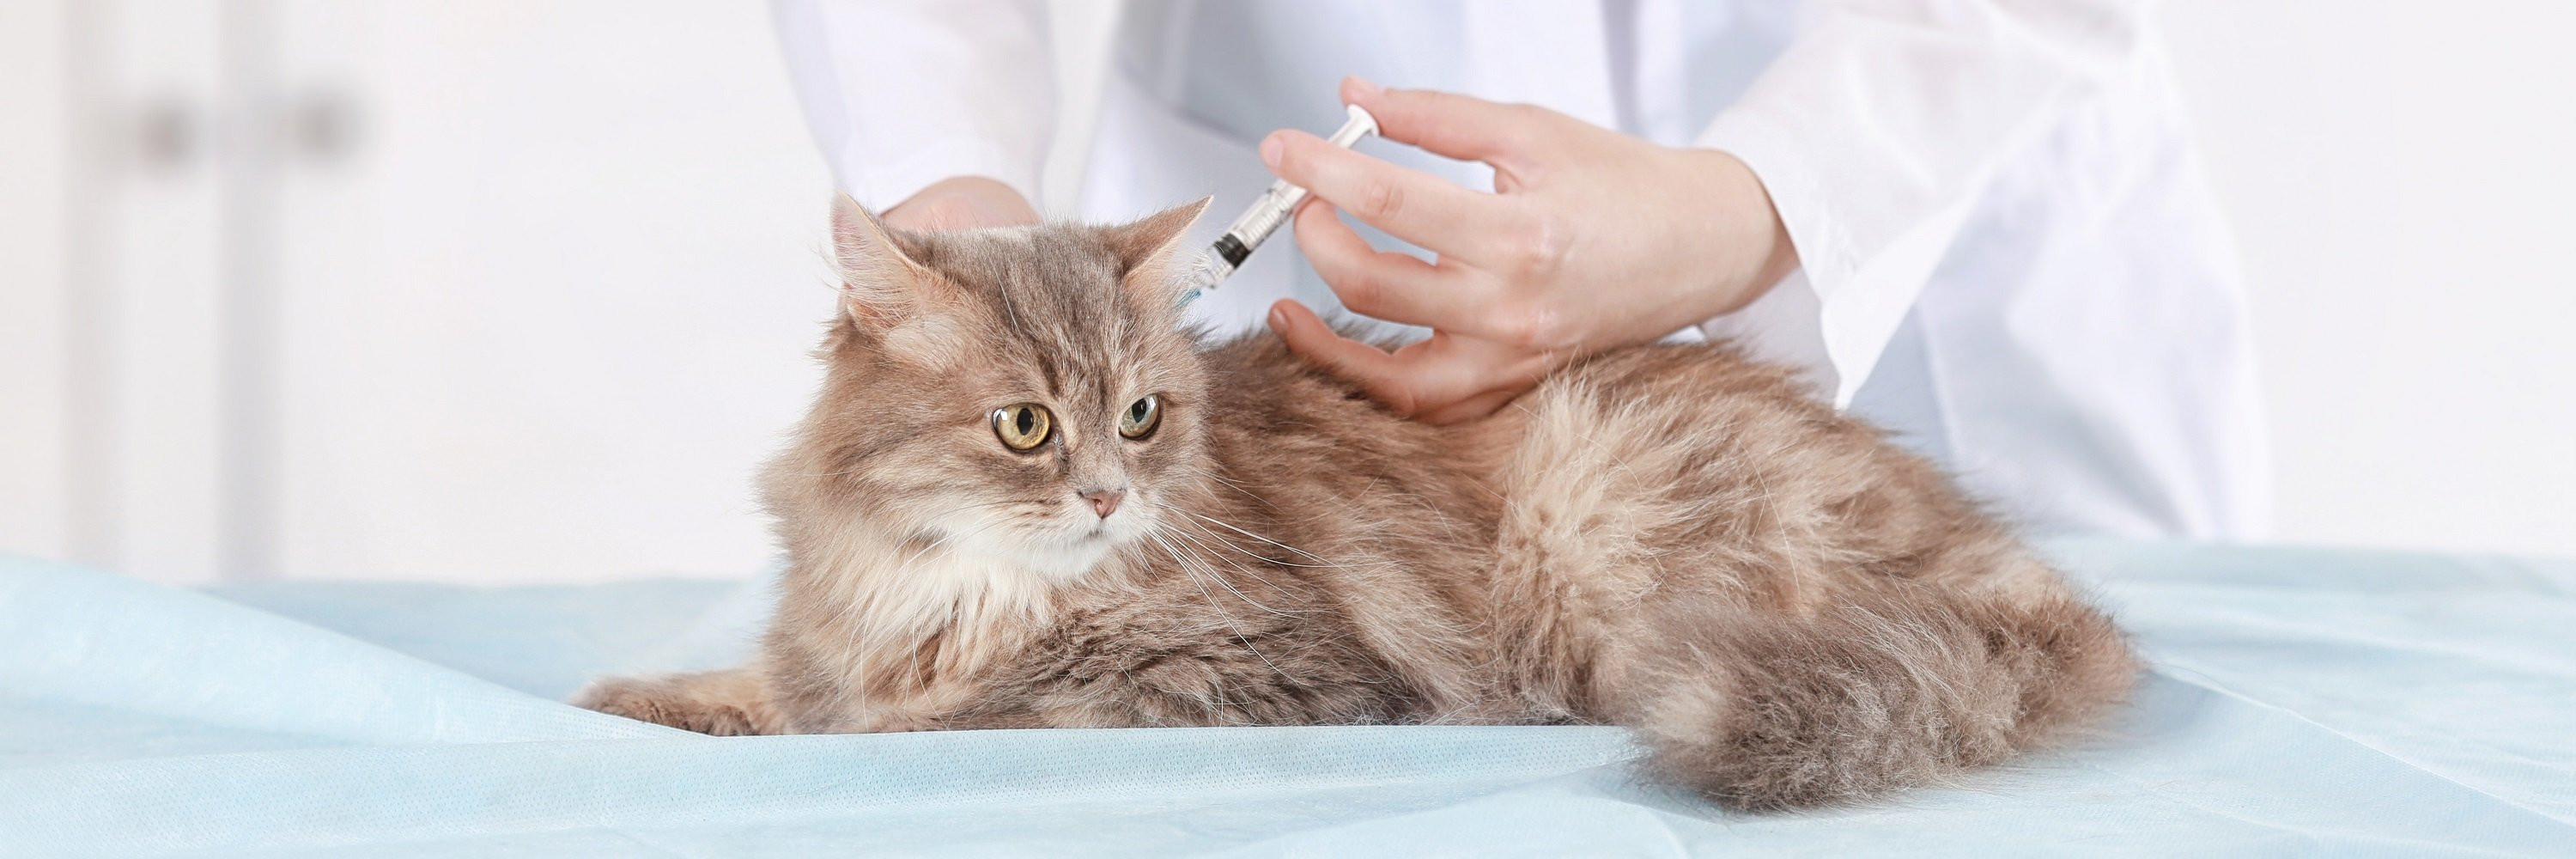 Сколько стоит прививка от бешенства кошке в ростове